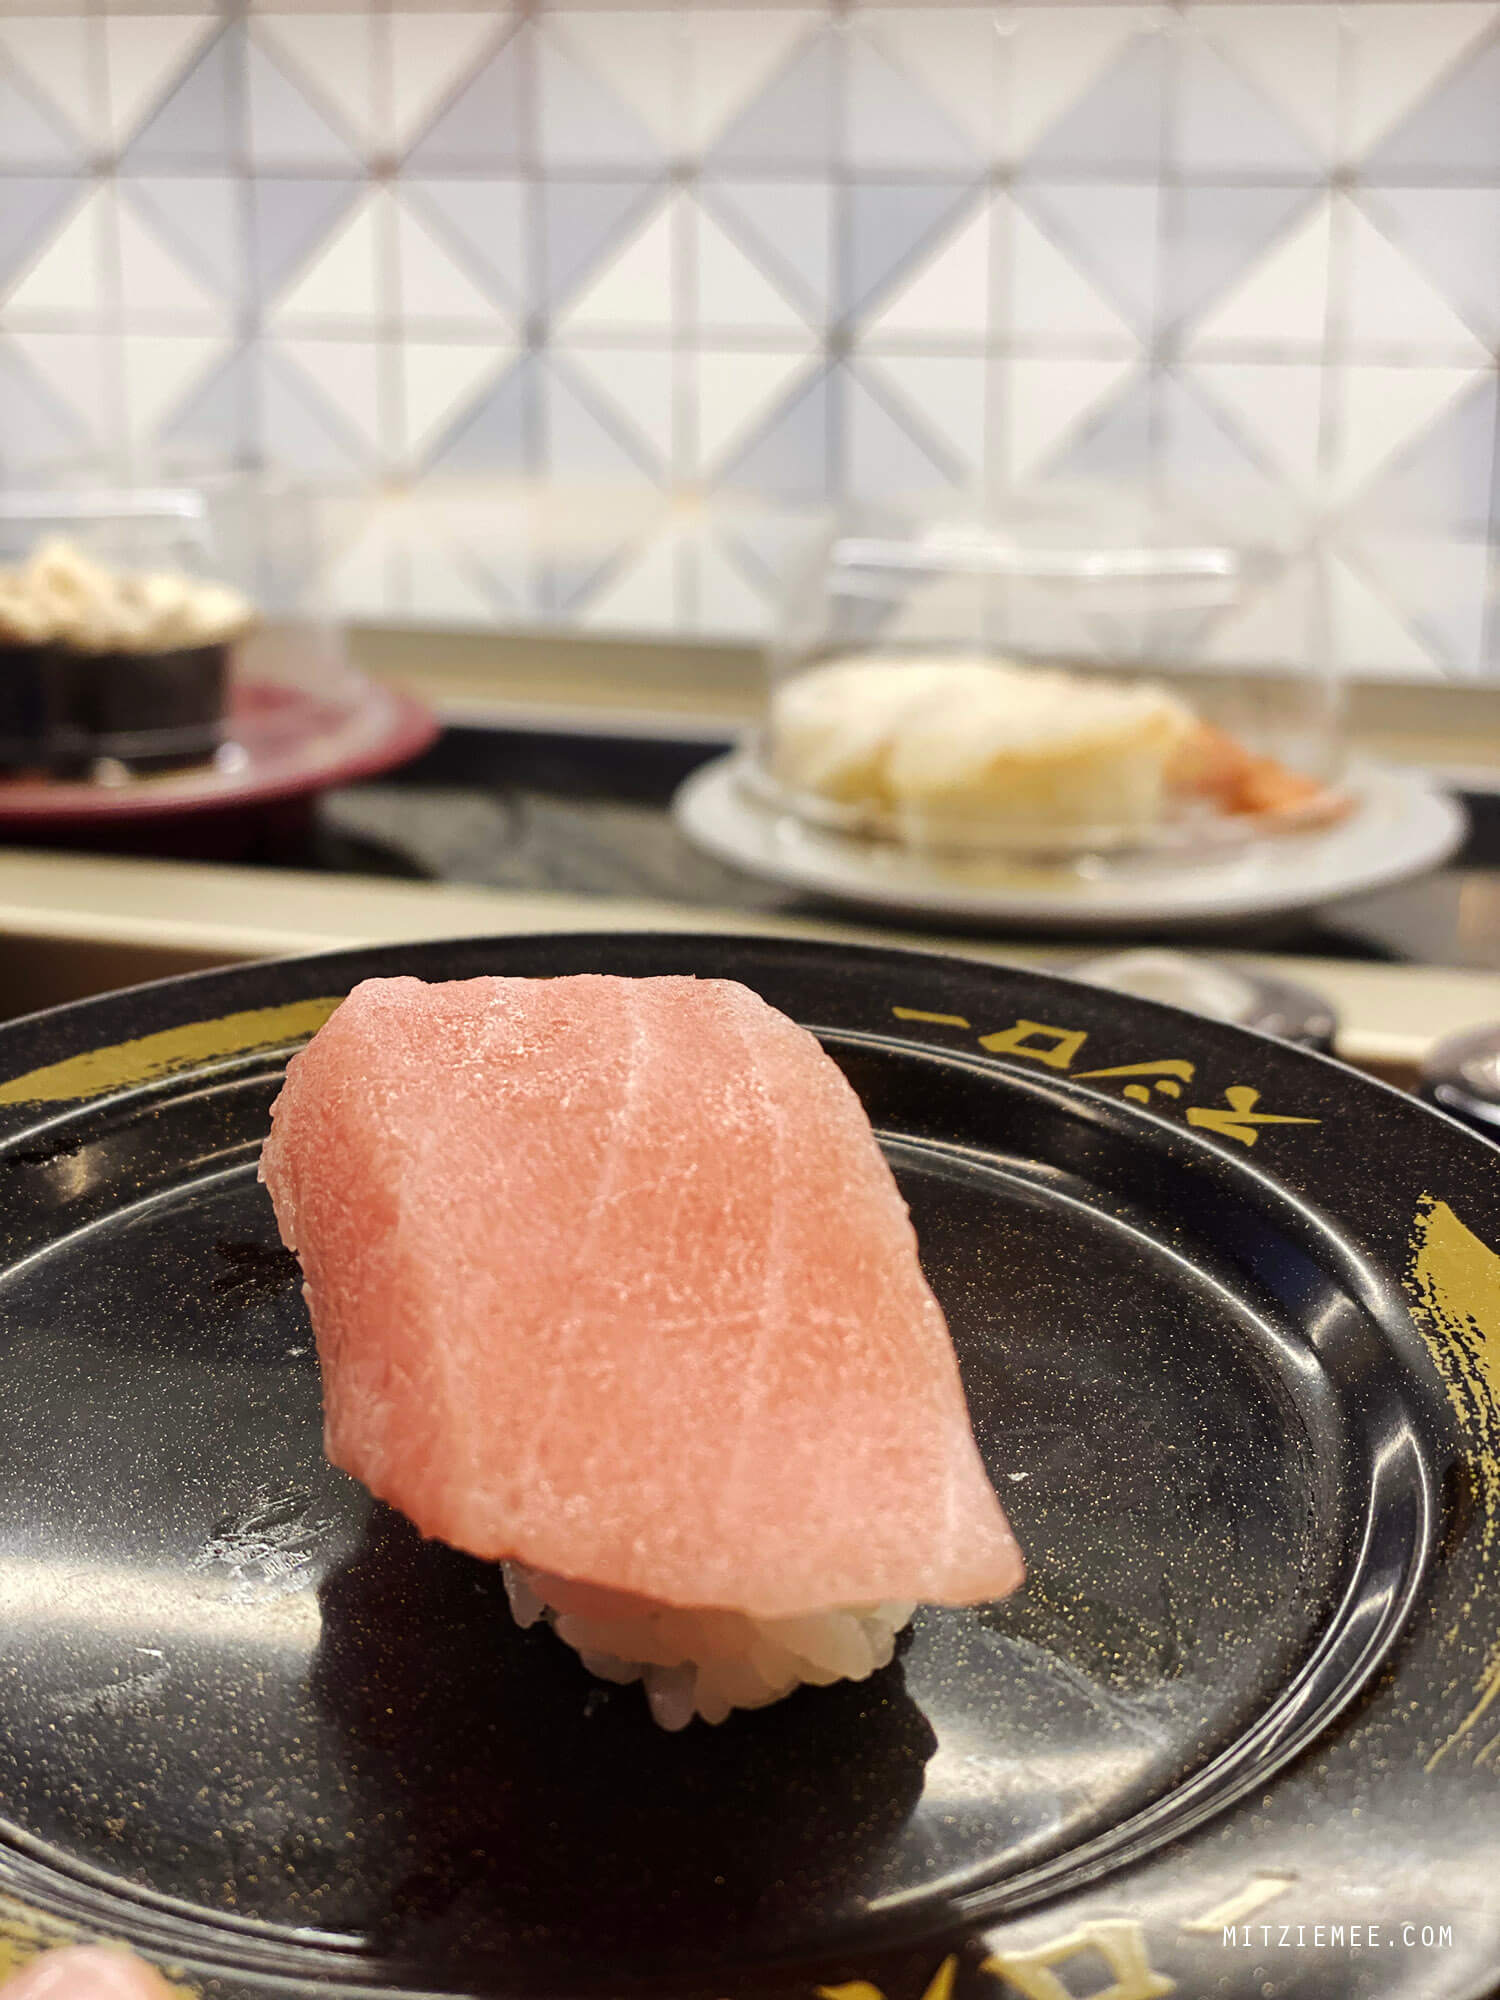 Dubai EXPO: Sushiro - The restaurant at the Japan Pavilion